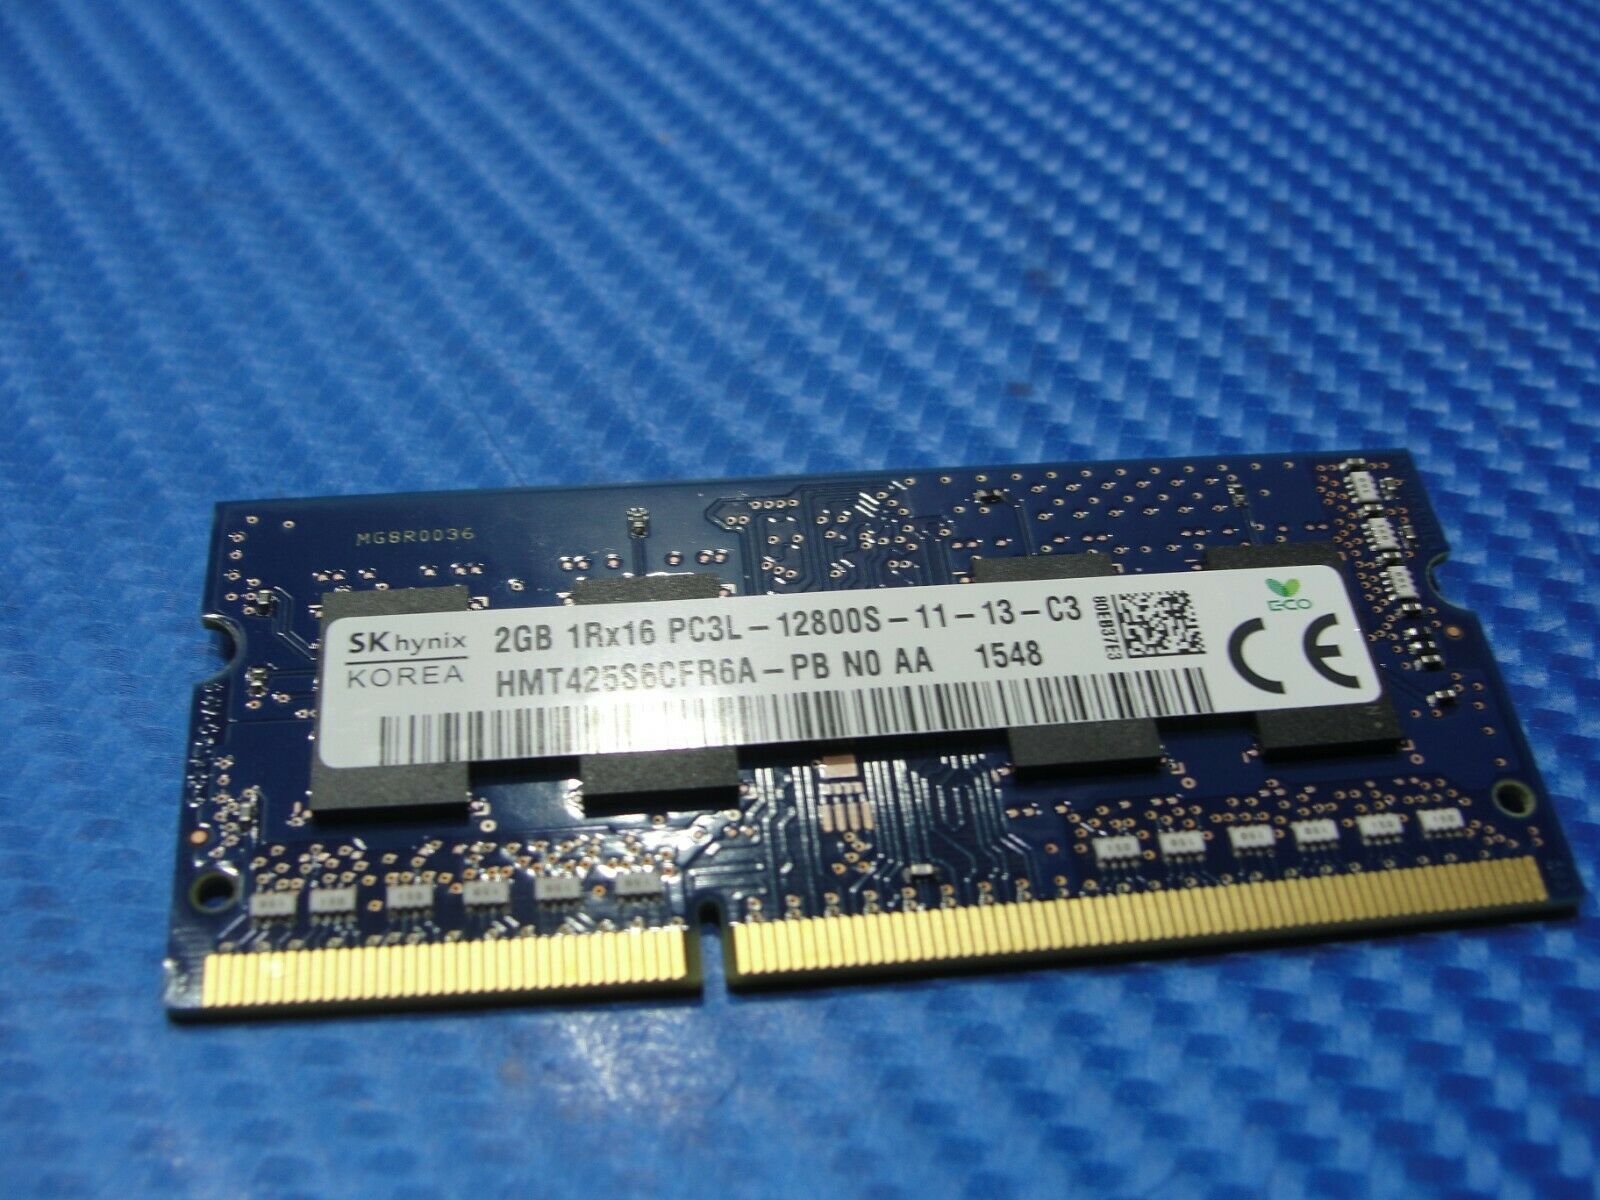 Dell 15 5558 SK Hynix 2GB 1Rx16 PC3L-12800S SO-DIMM Memory RAM HMT425S6CFR6A-PB SK Hynix